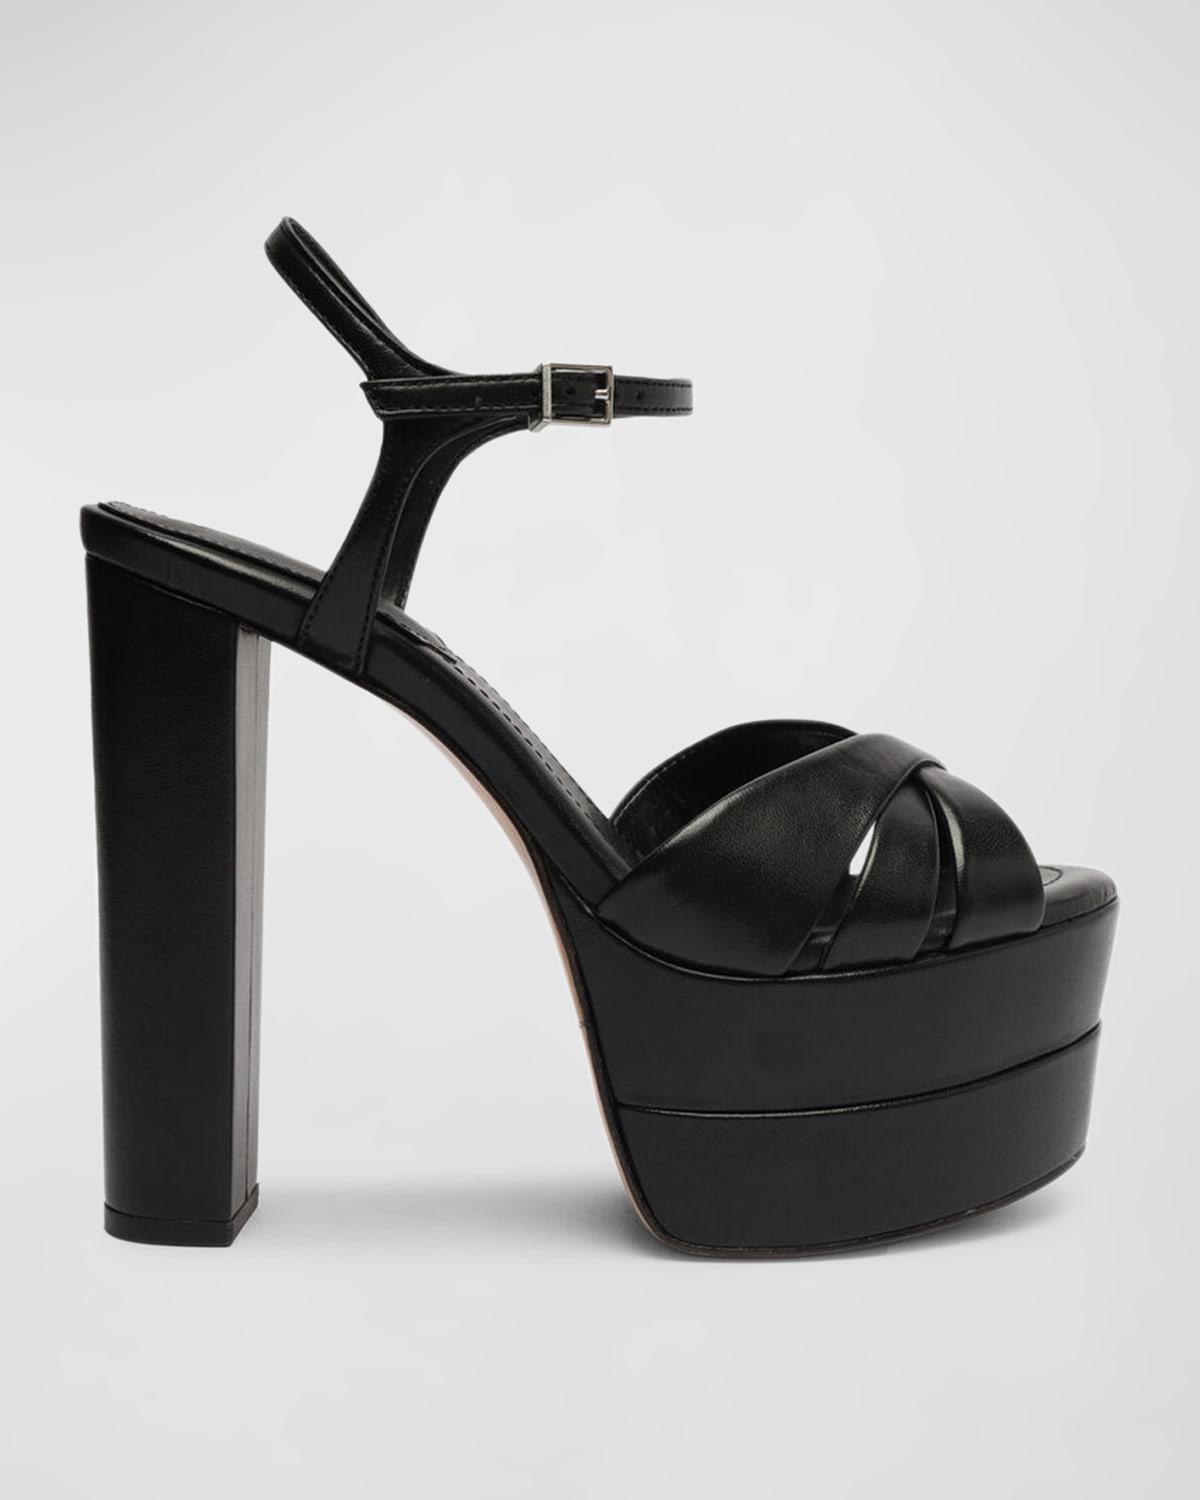 Schutz Keefa Platform Sandal Product Image